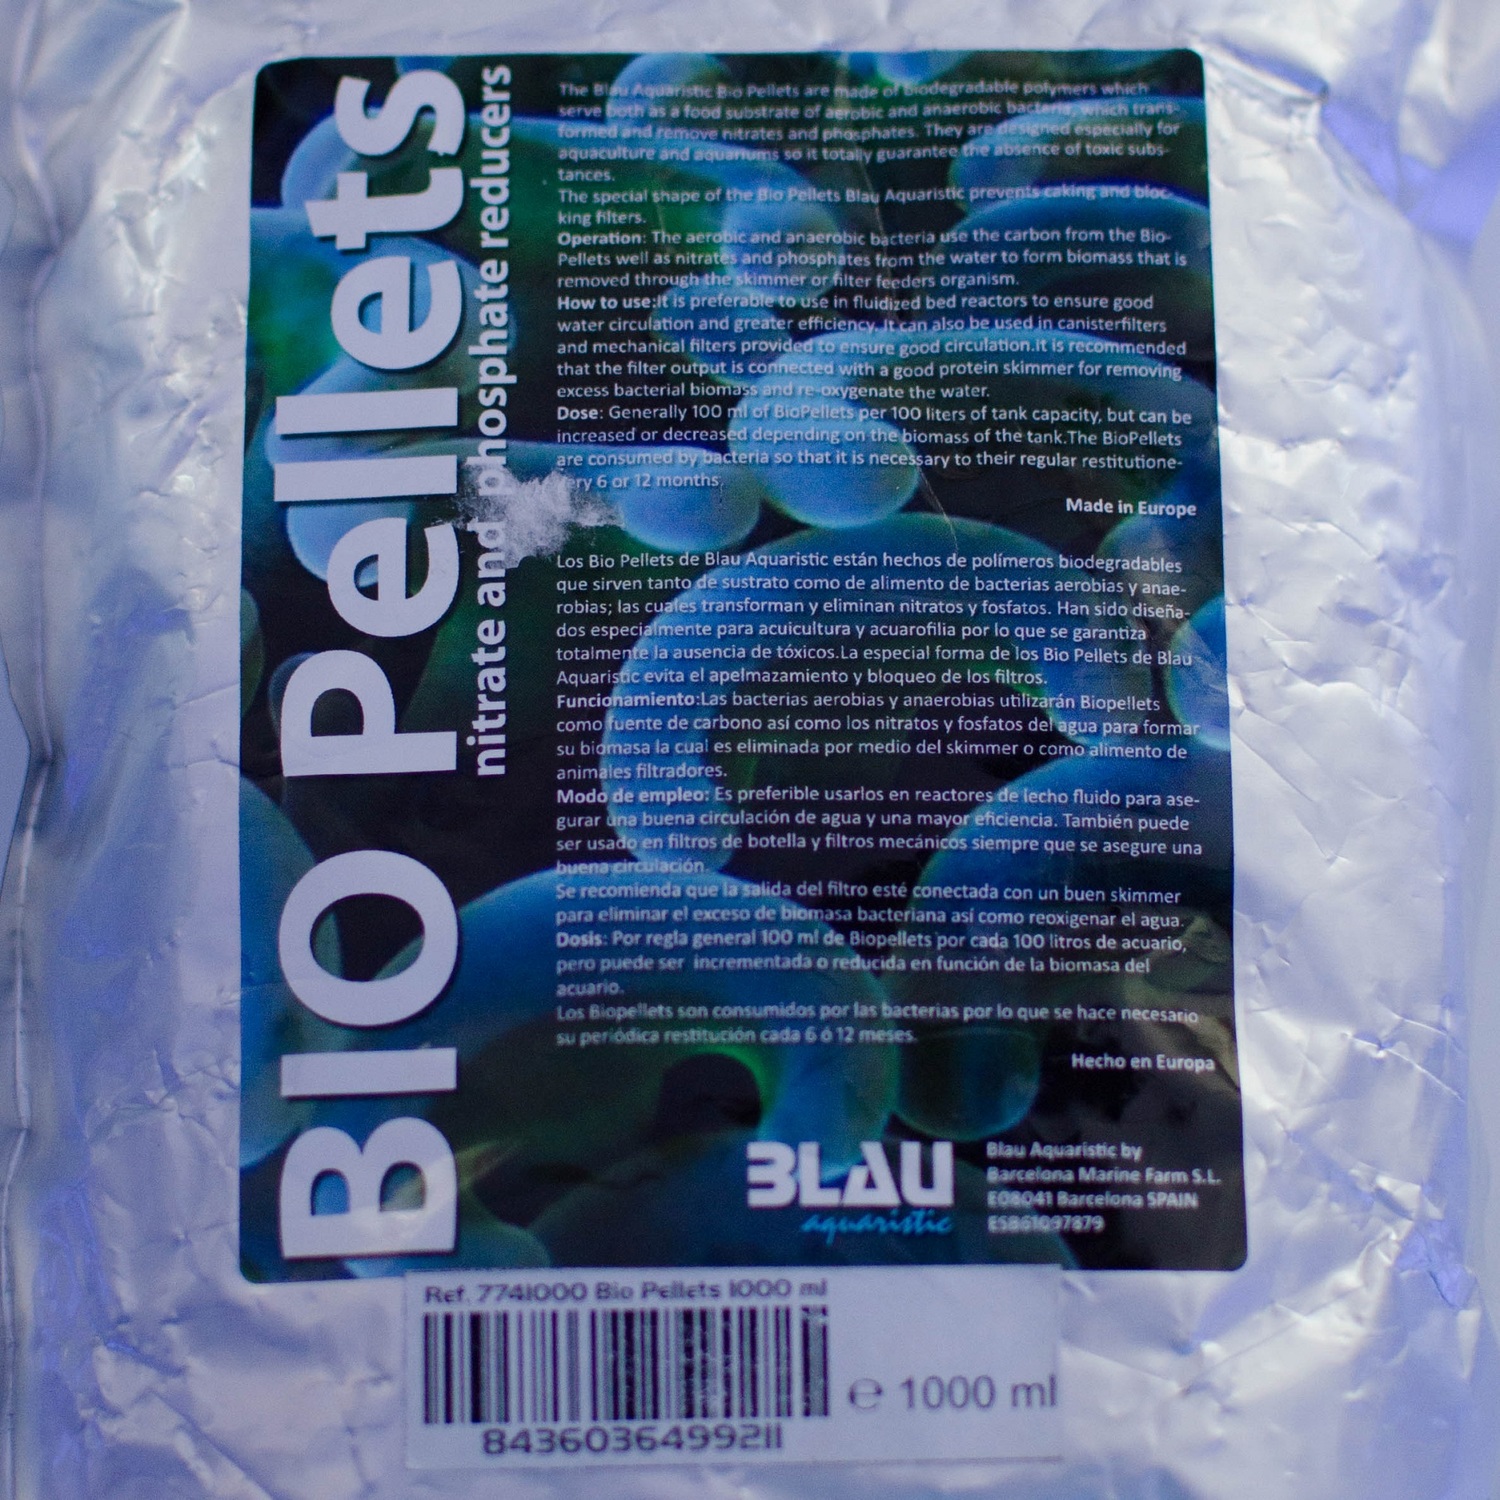 Соль, корма, химия Blau Aquaristic by Barcelona Marine Farm S.L. Bio Pellets